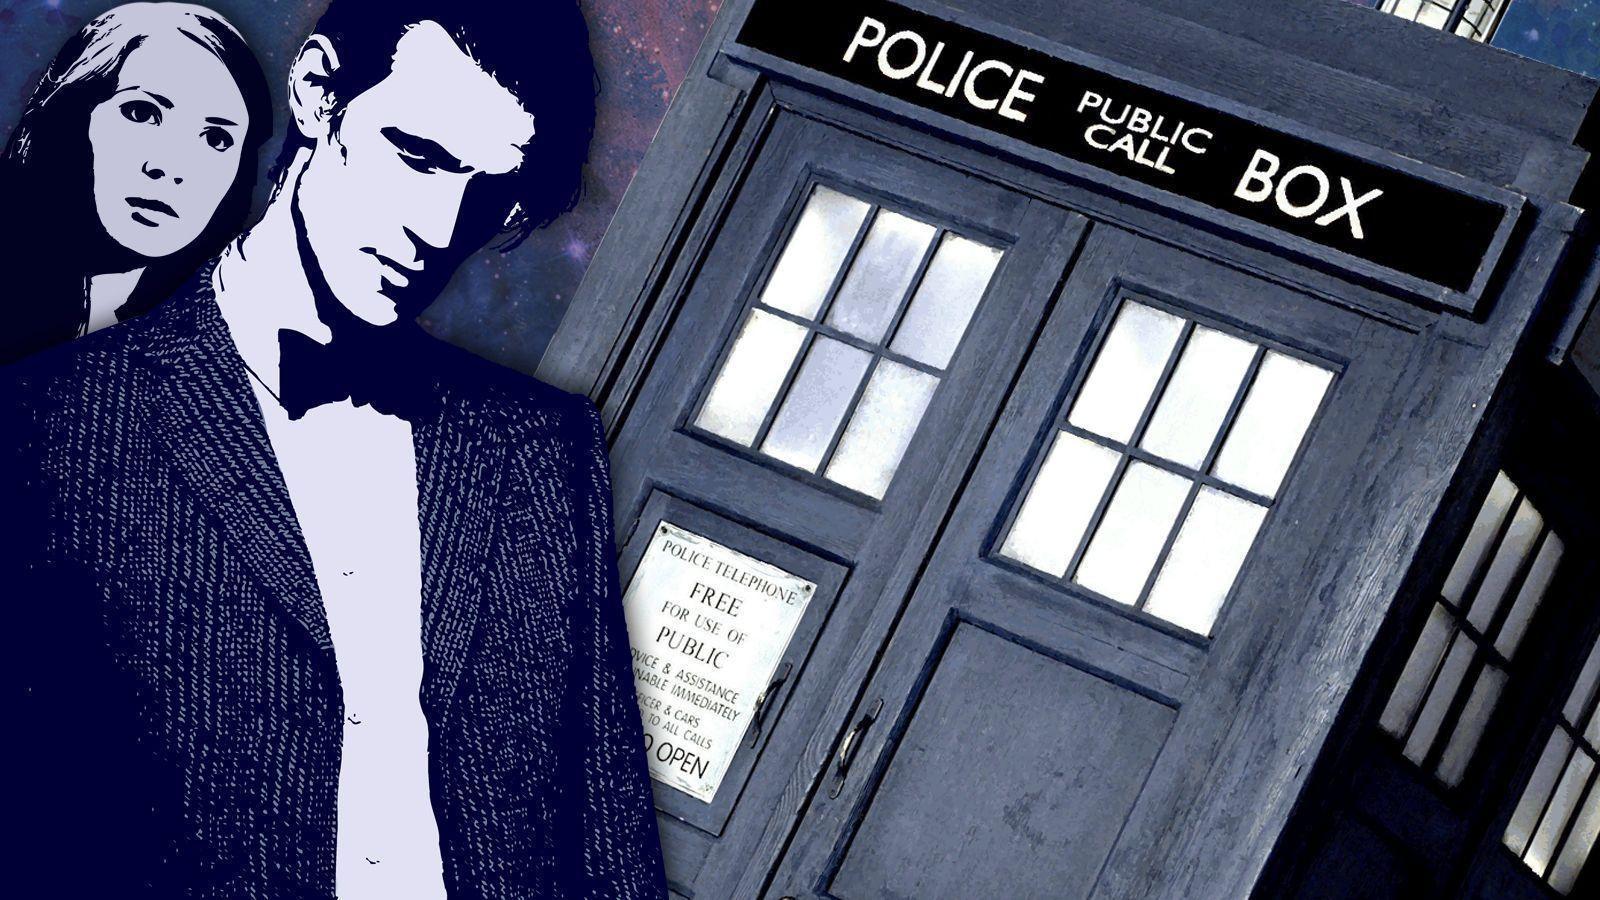 Doctor Who Wallpaper Tardis Matt Smith Image & Picture